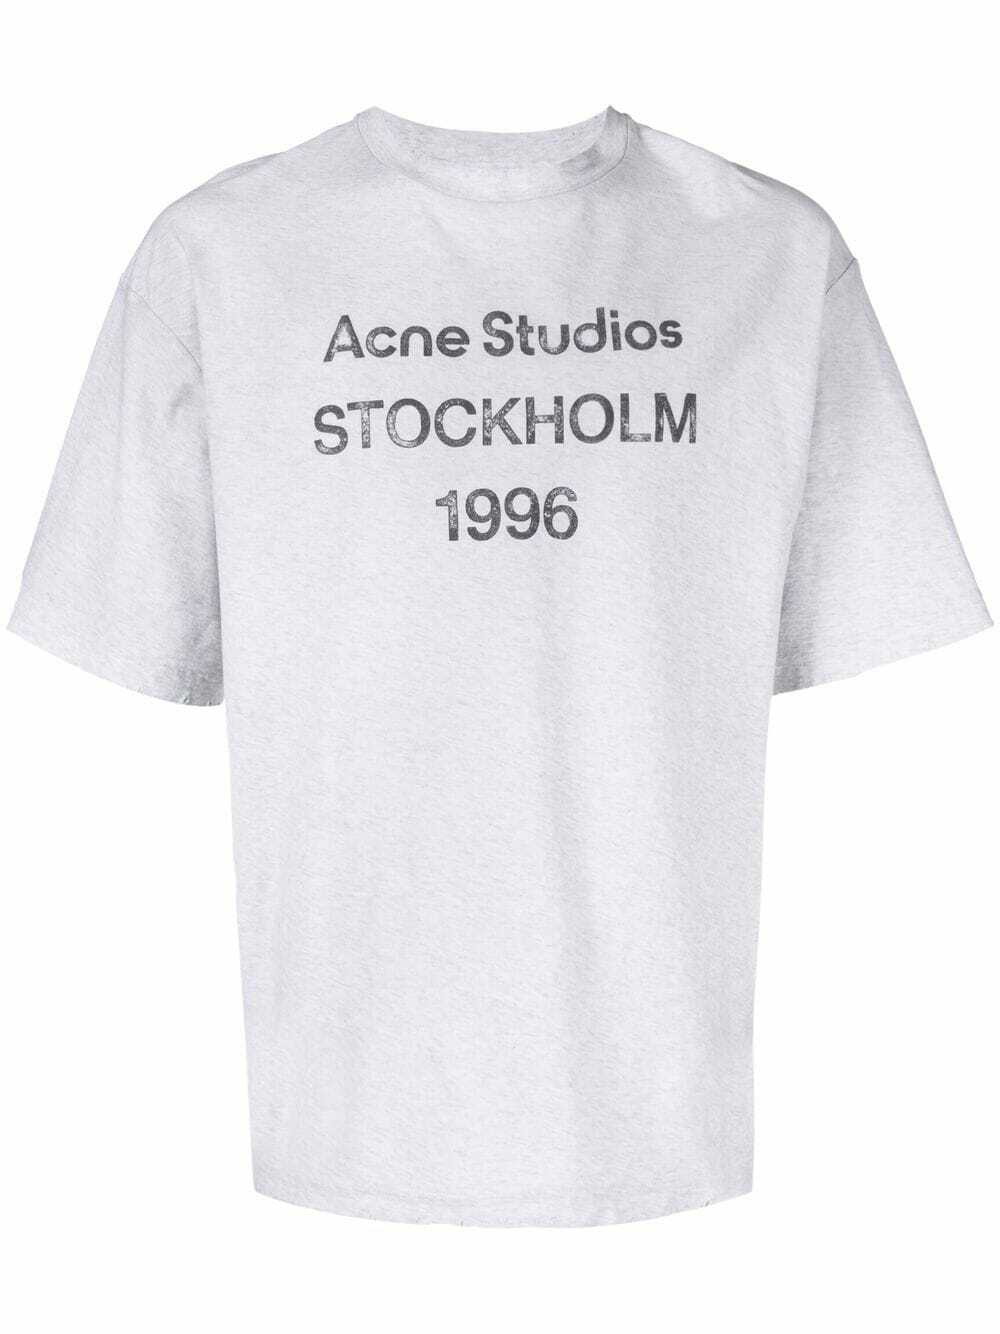 ACNE STUDIOS - Logo Cotton T-shirt Acne Studios